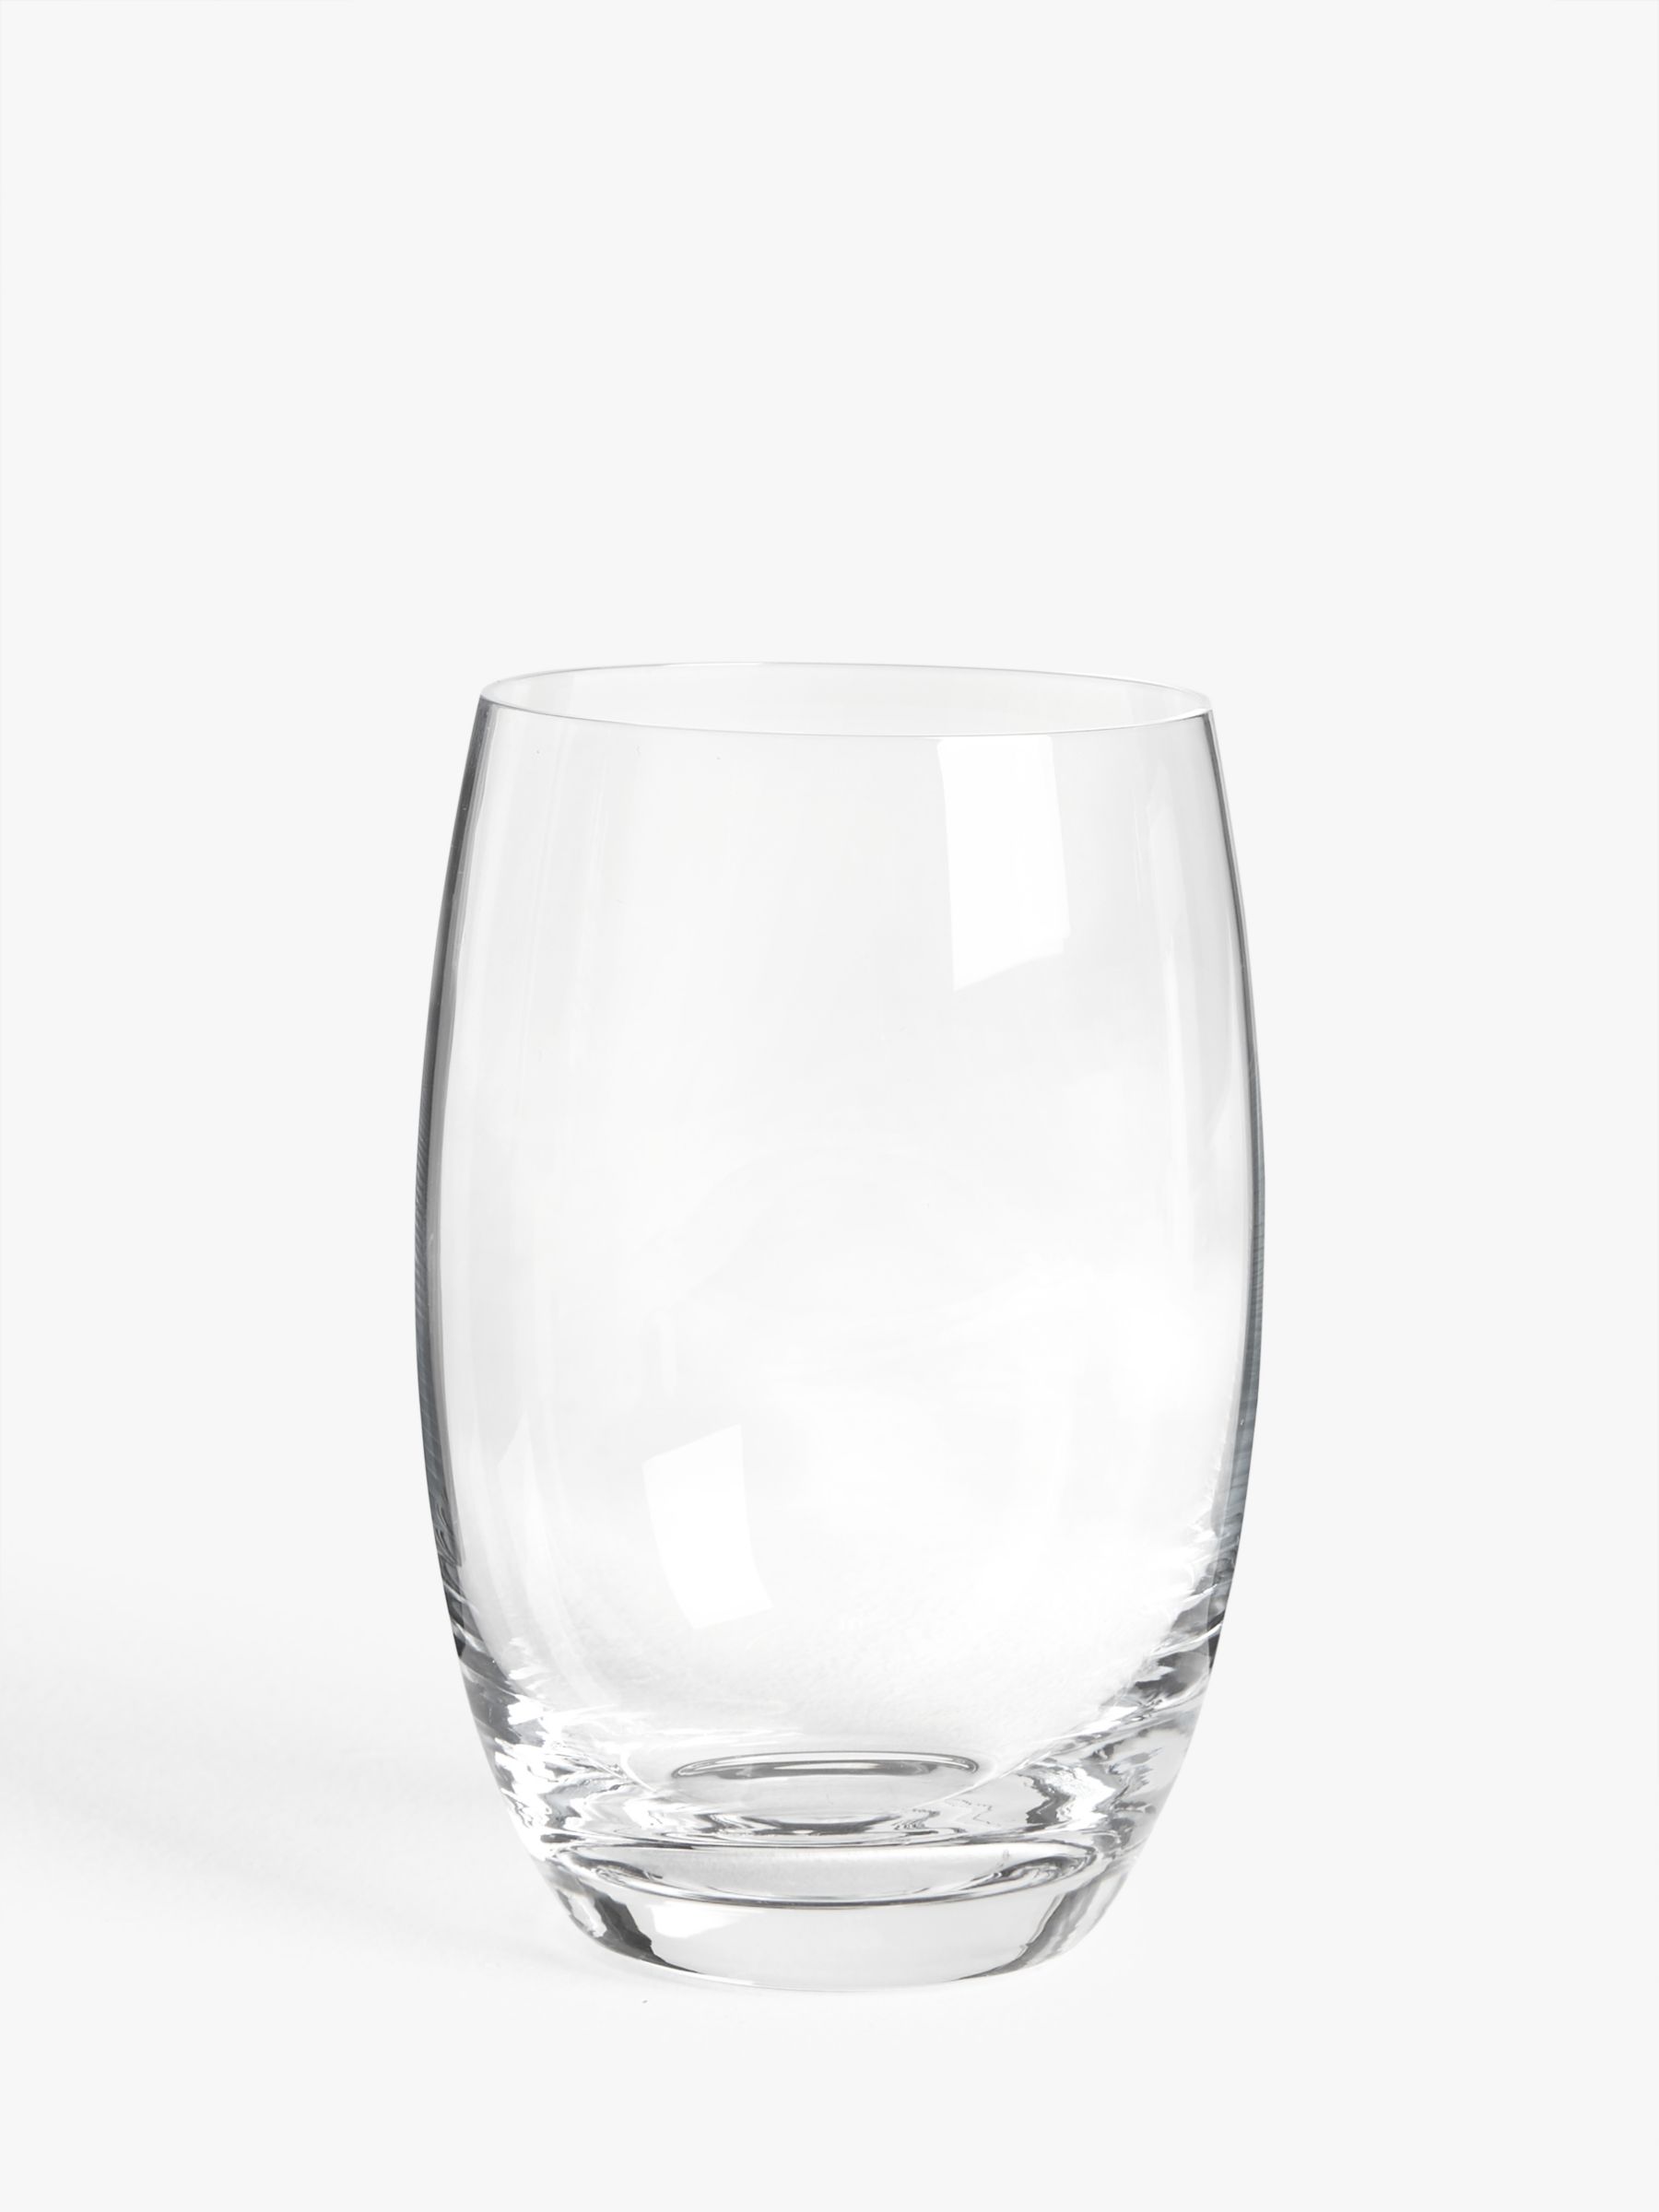 John Lewis & Partners John Lewis & Partners Highball Gin Glass, Set of 4, 400ml, Clear